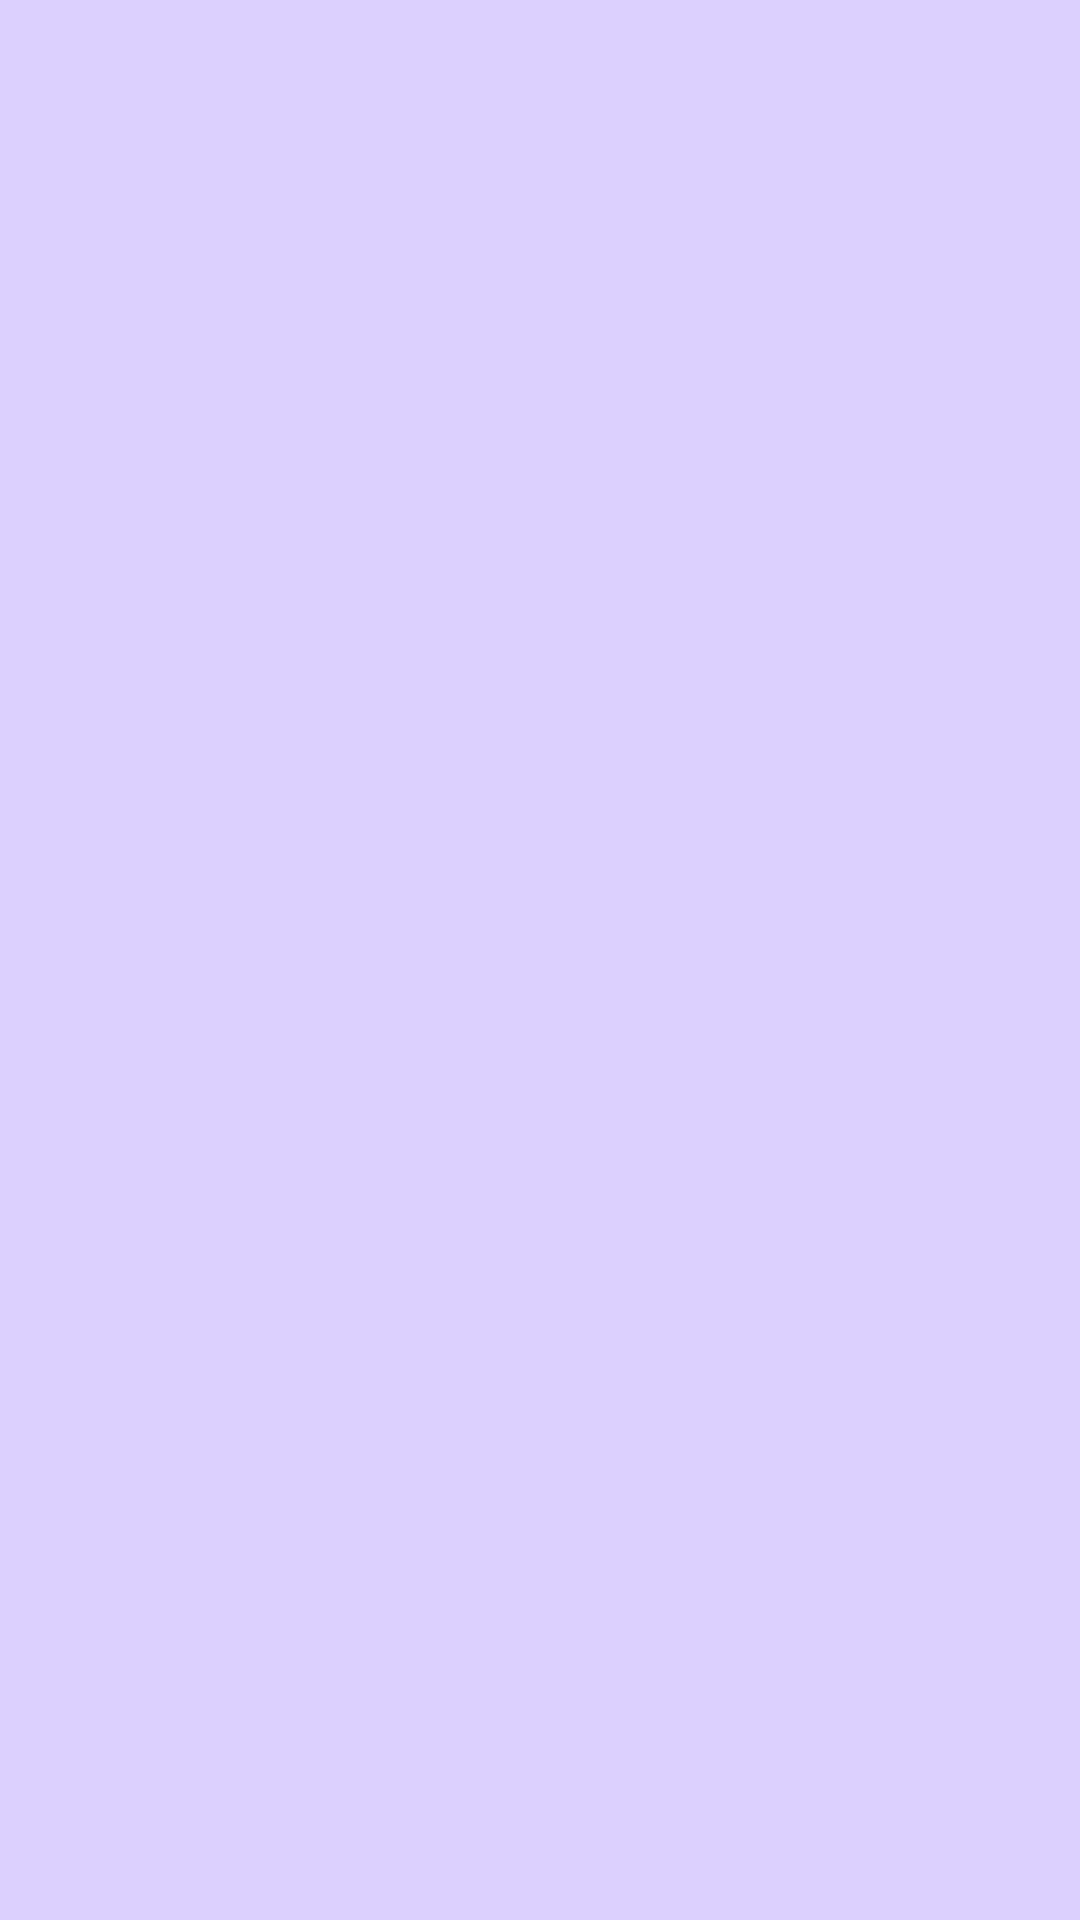 1080x1920 Pale Lavender Solid Color Background